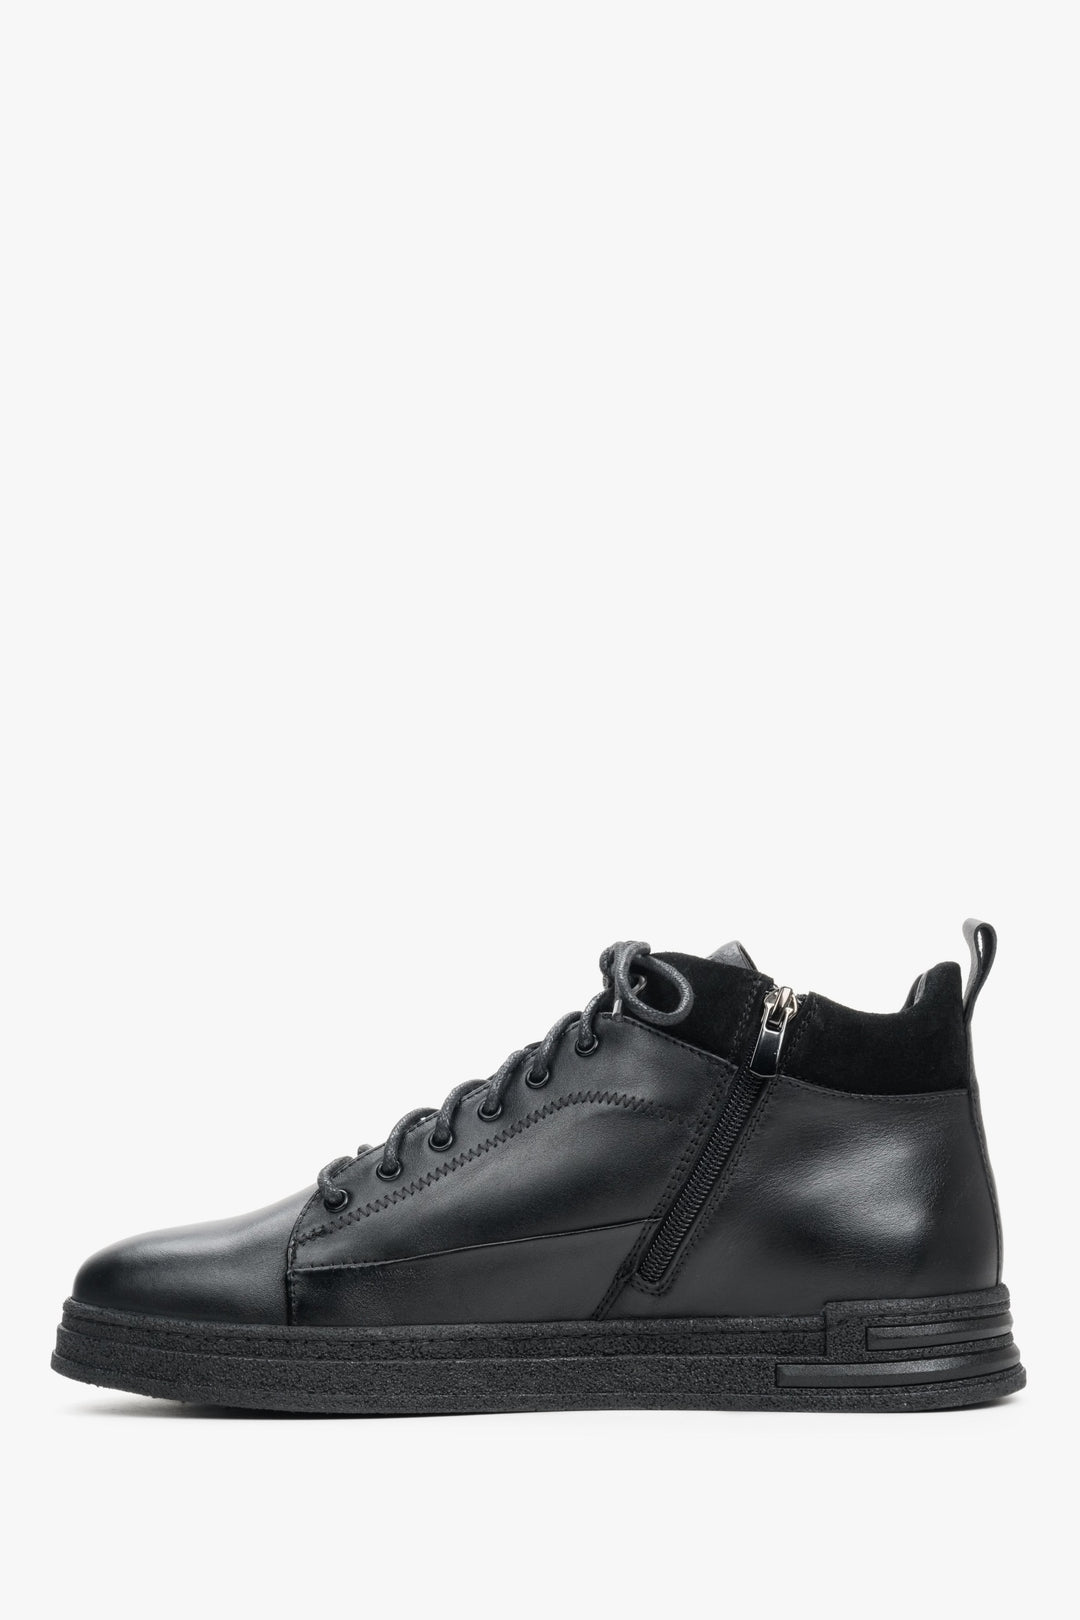 Winter high-top men's sneakers in black by Estro - shoe profile.